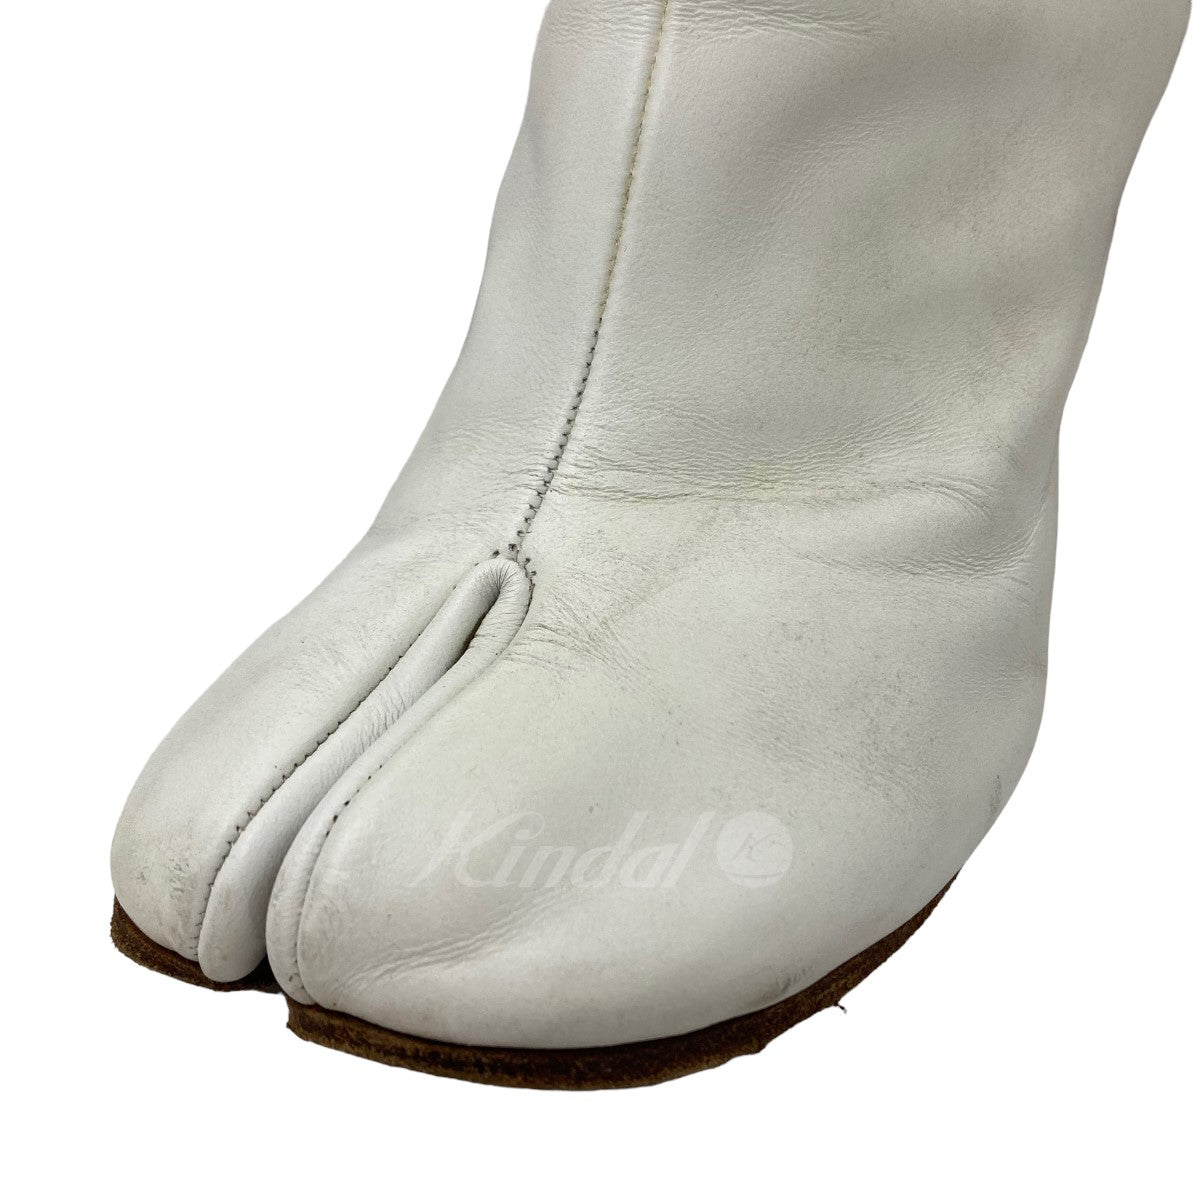 Maison Margiela(メゾンマルジェラ) 足袋ブーツ S58WU0260 ホワイト 